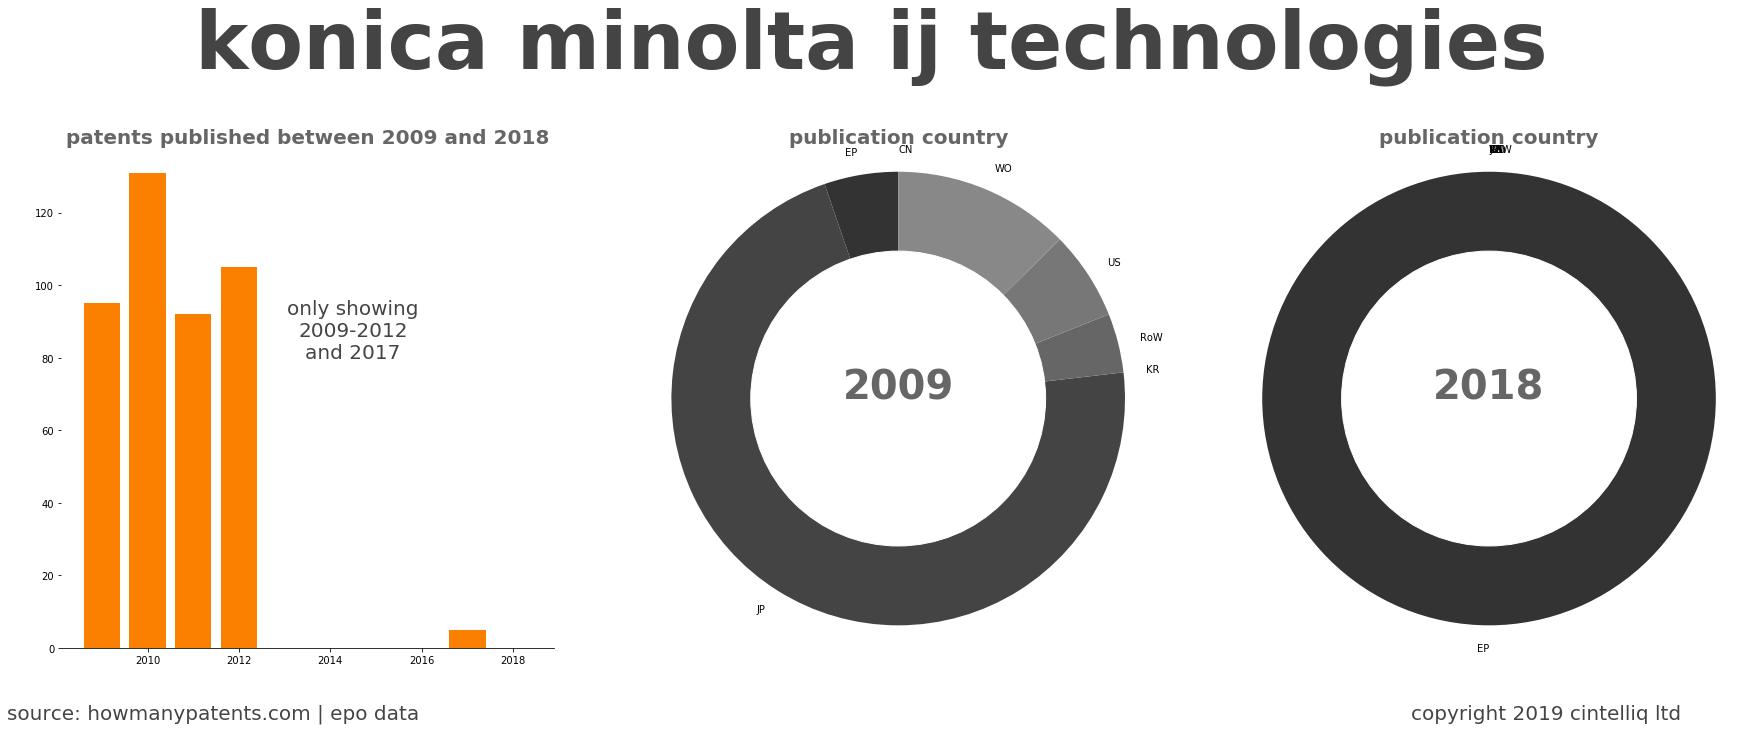 summary of patents for Konica Minolta Ij Technologies